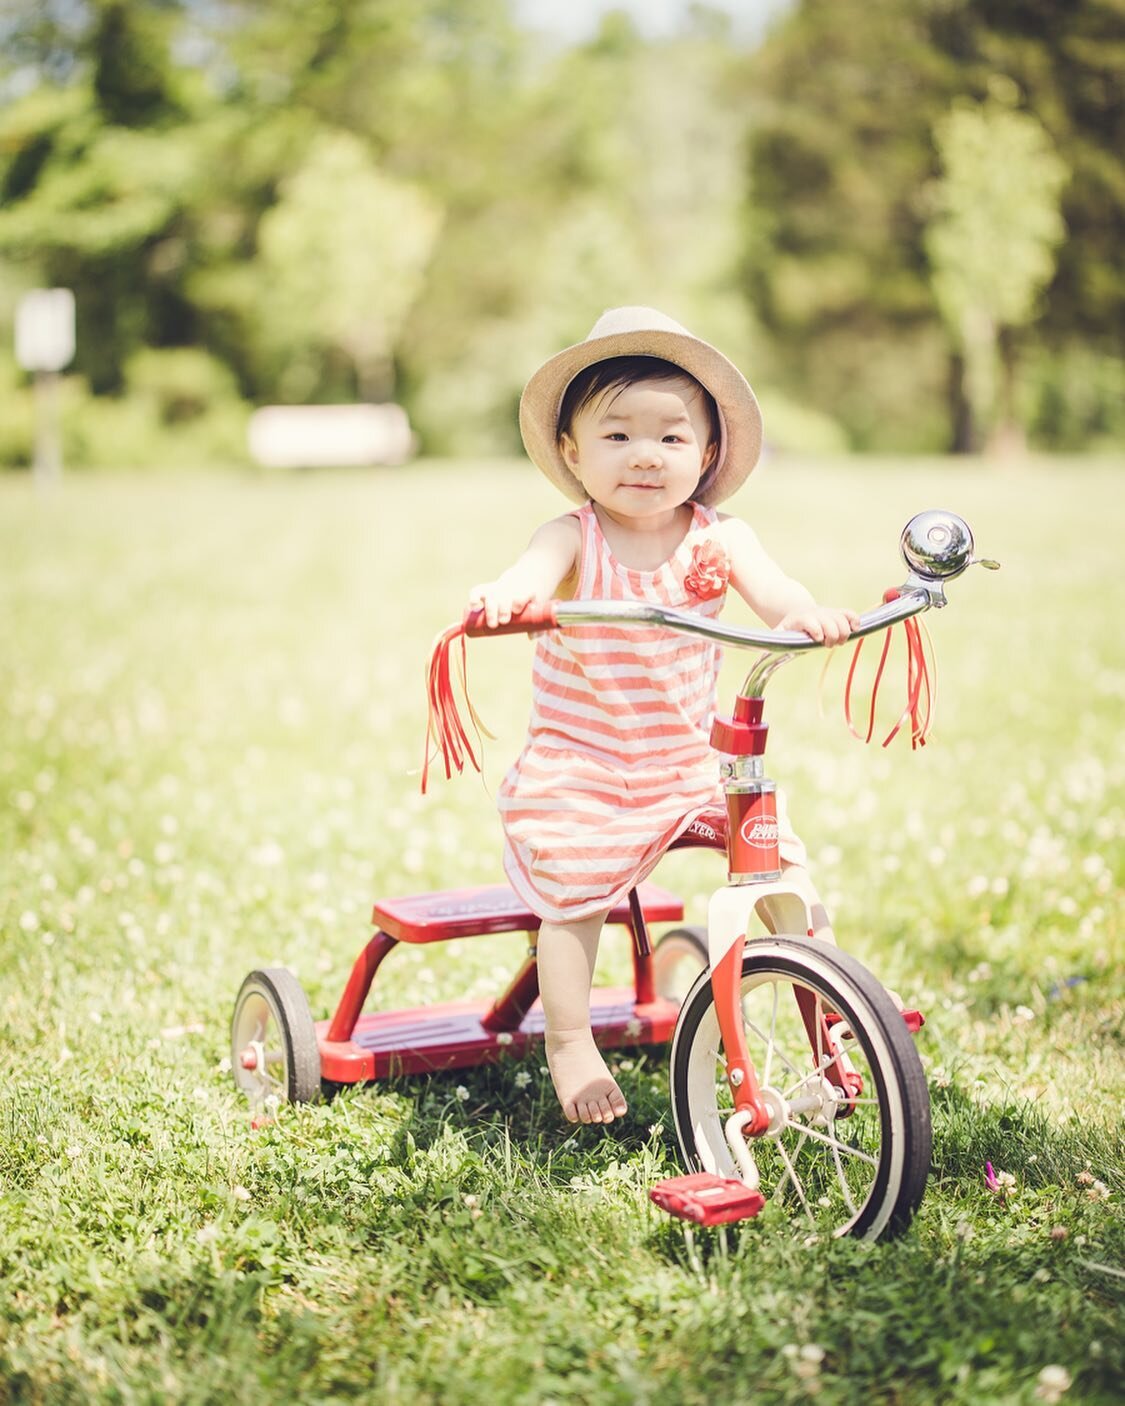 How she loves the new toy - a red cute tricycle ✨💫😘

#wildandbravelittles
#theartofchildhood
#childrenseemagic
#candidchildhood
#letthekids
#mom_hub
#documentyourmemories
#runwildmychild
#the_sugar_jar
#purelyauthenticchildhood
#boylifecaptured
#ta